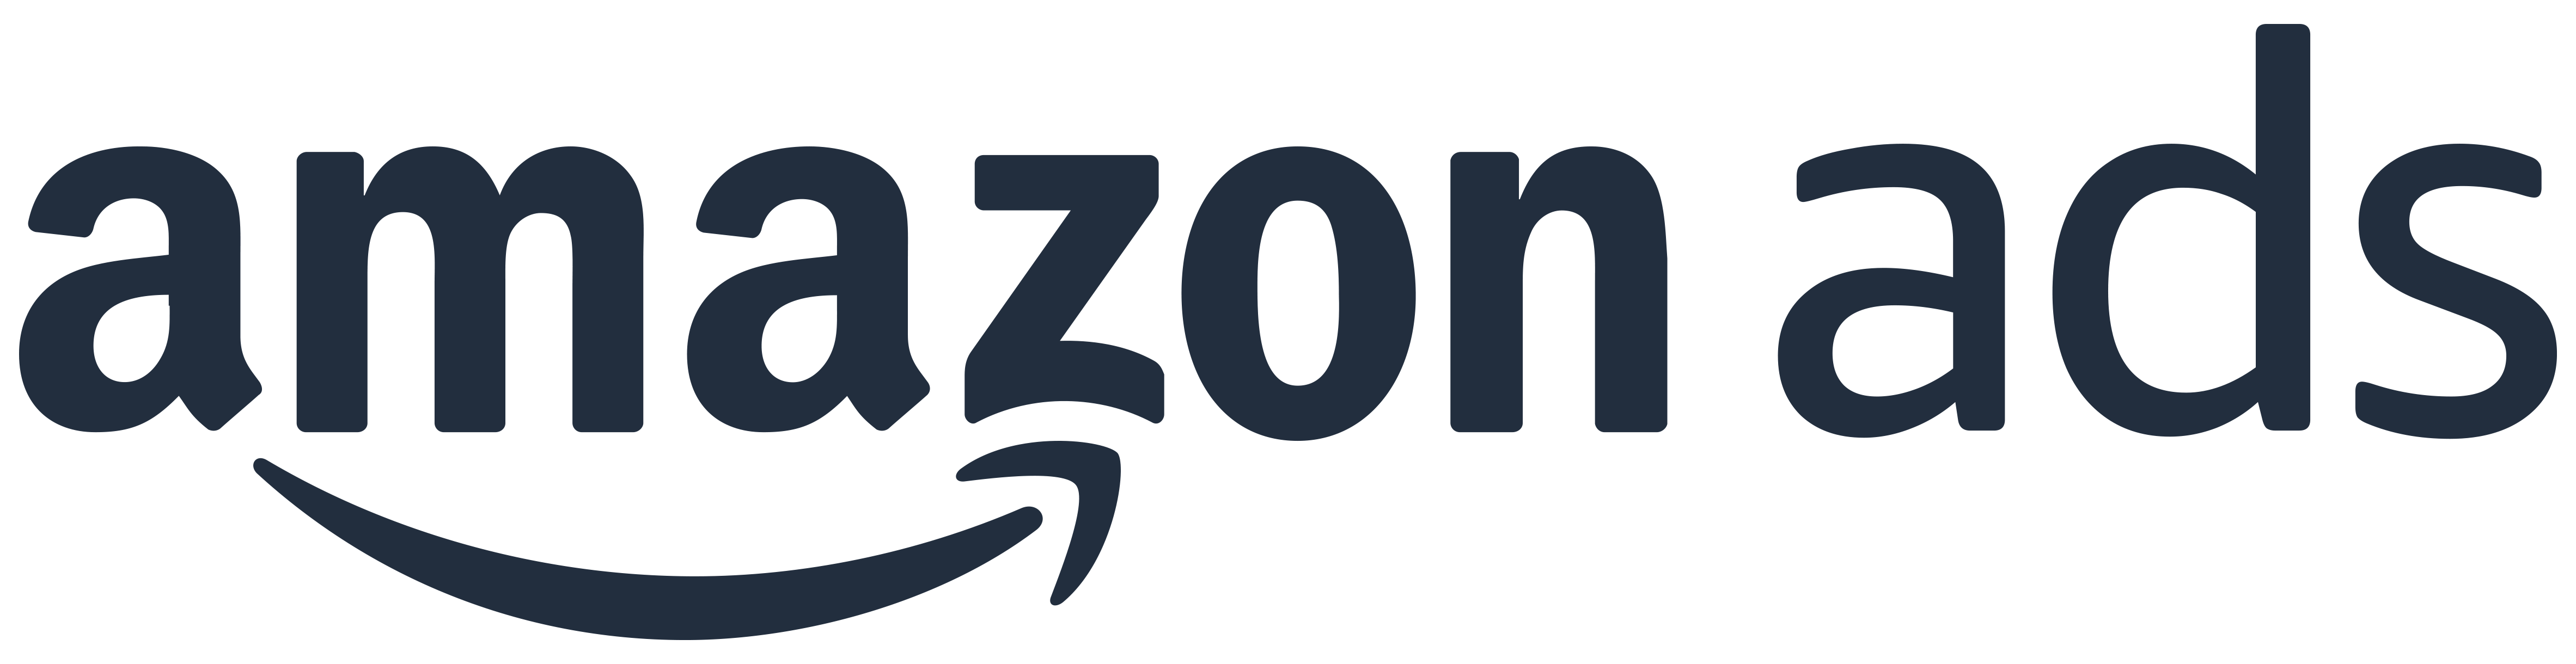 Amazon Partner